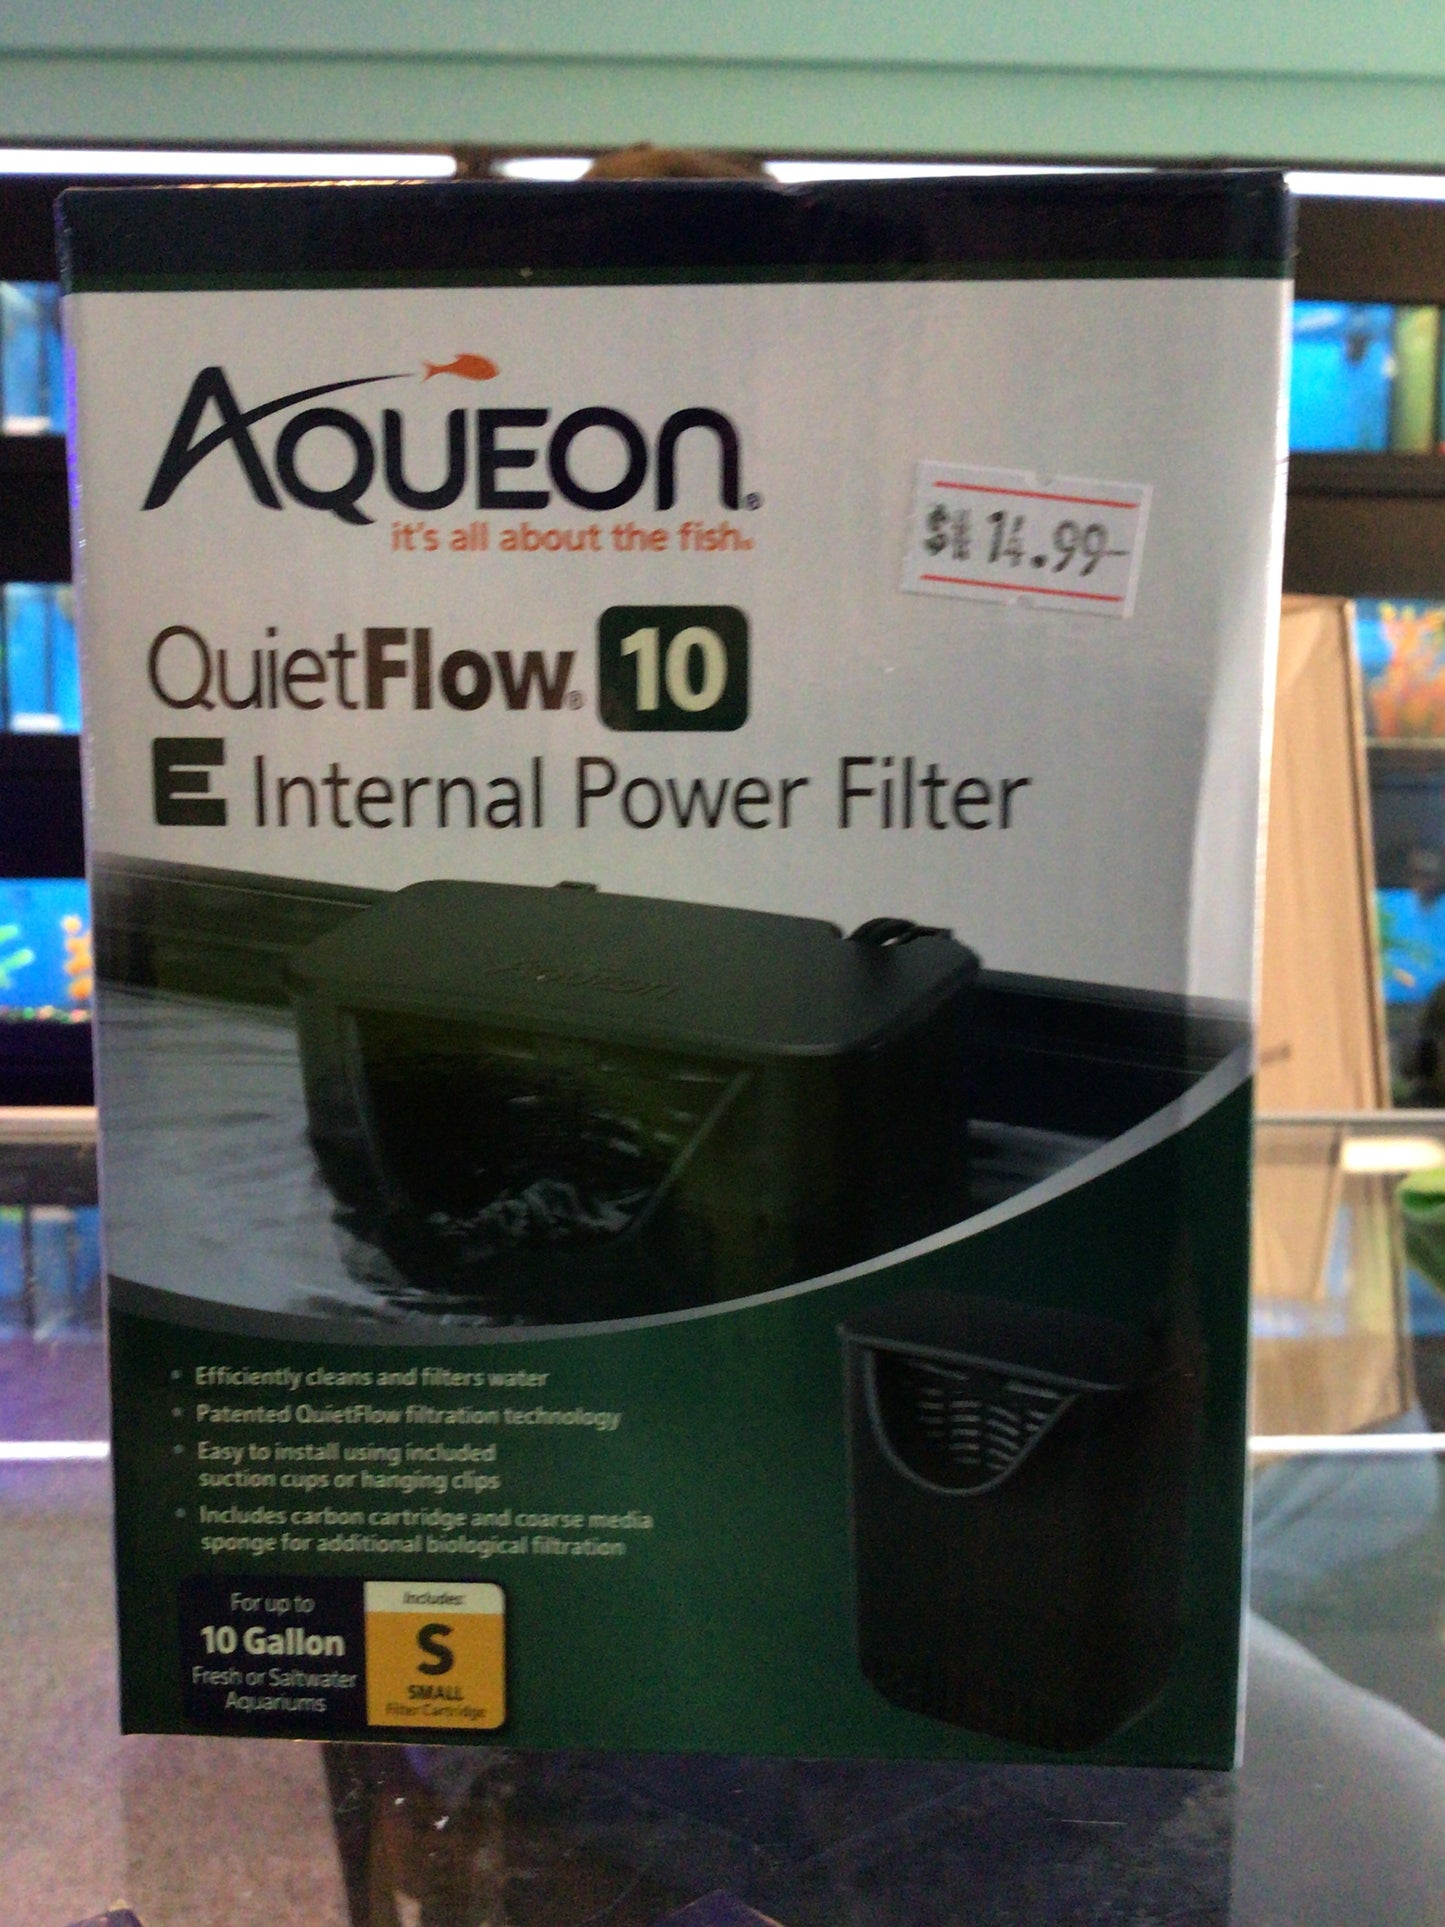 Aqueon quietflow internal power filter